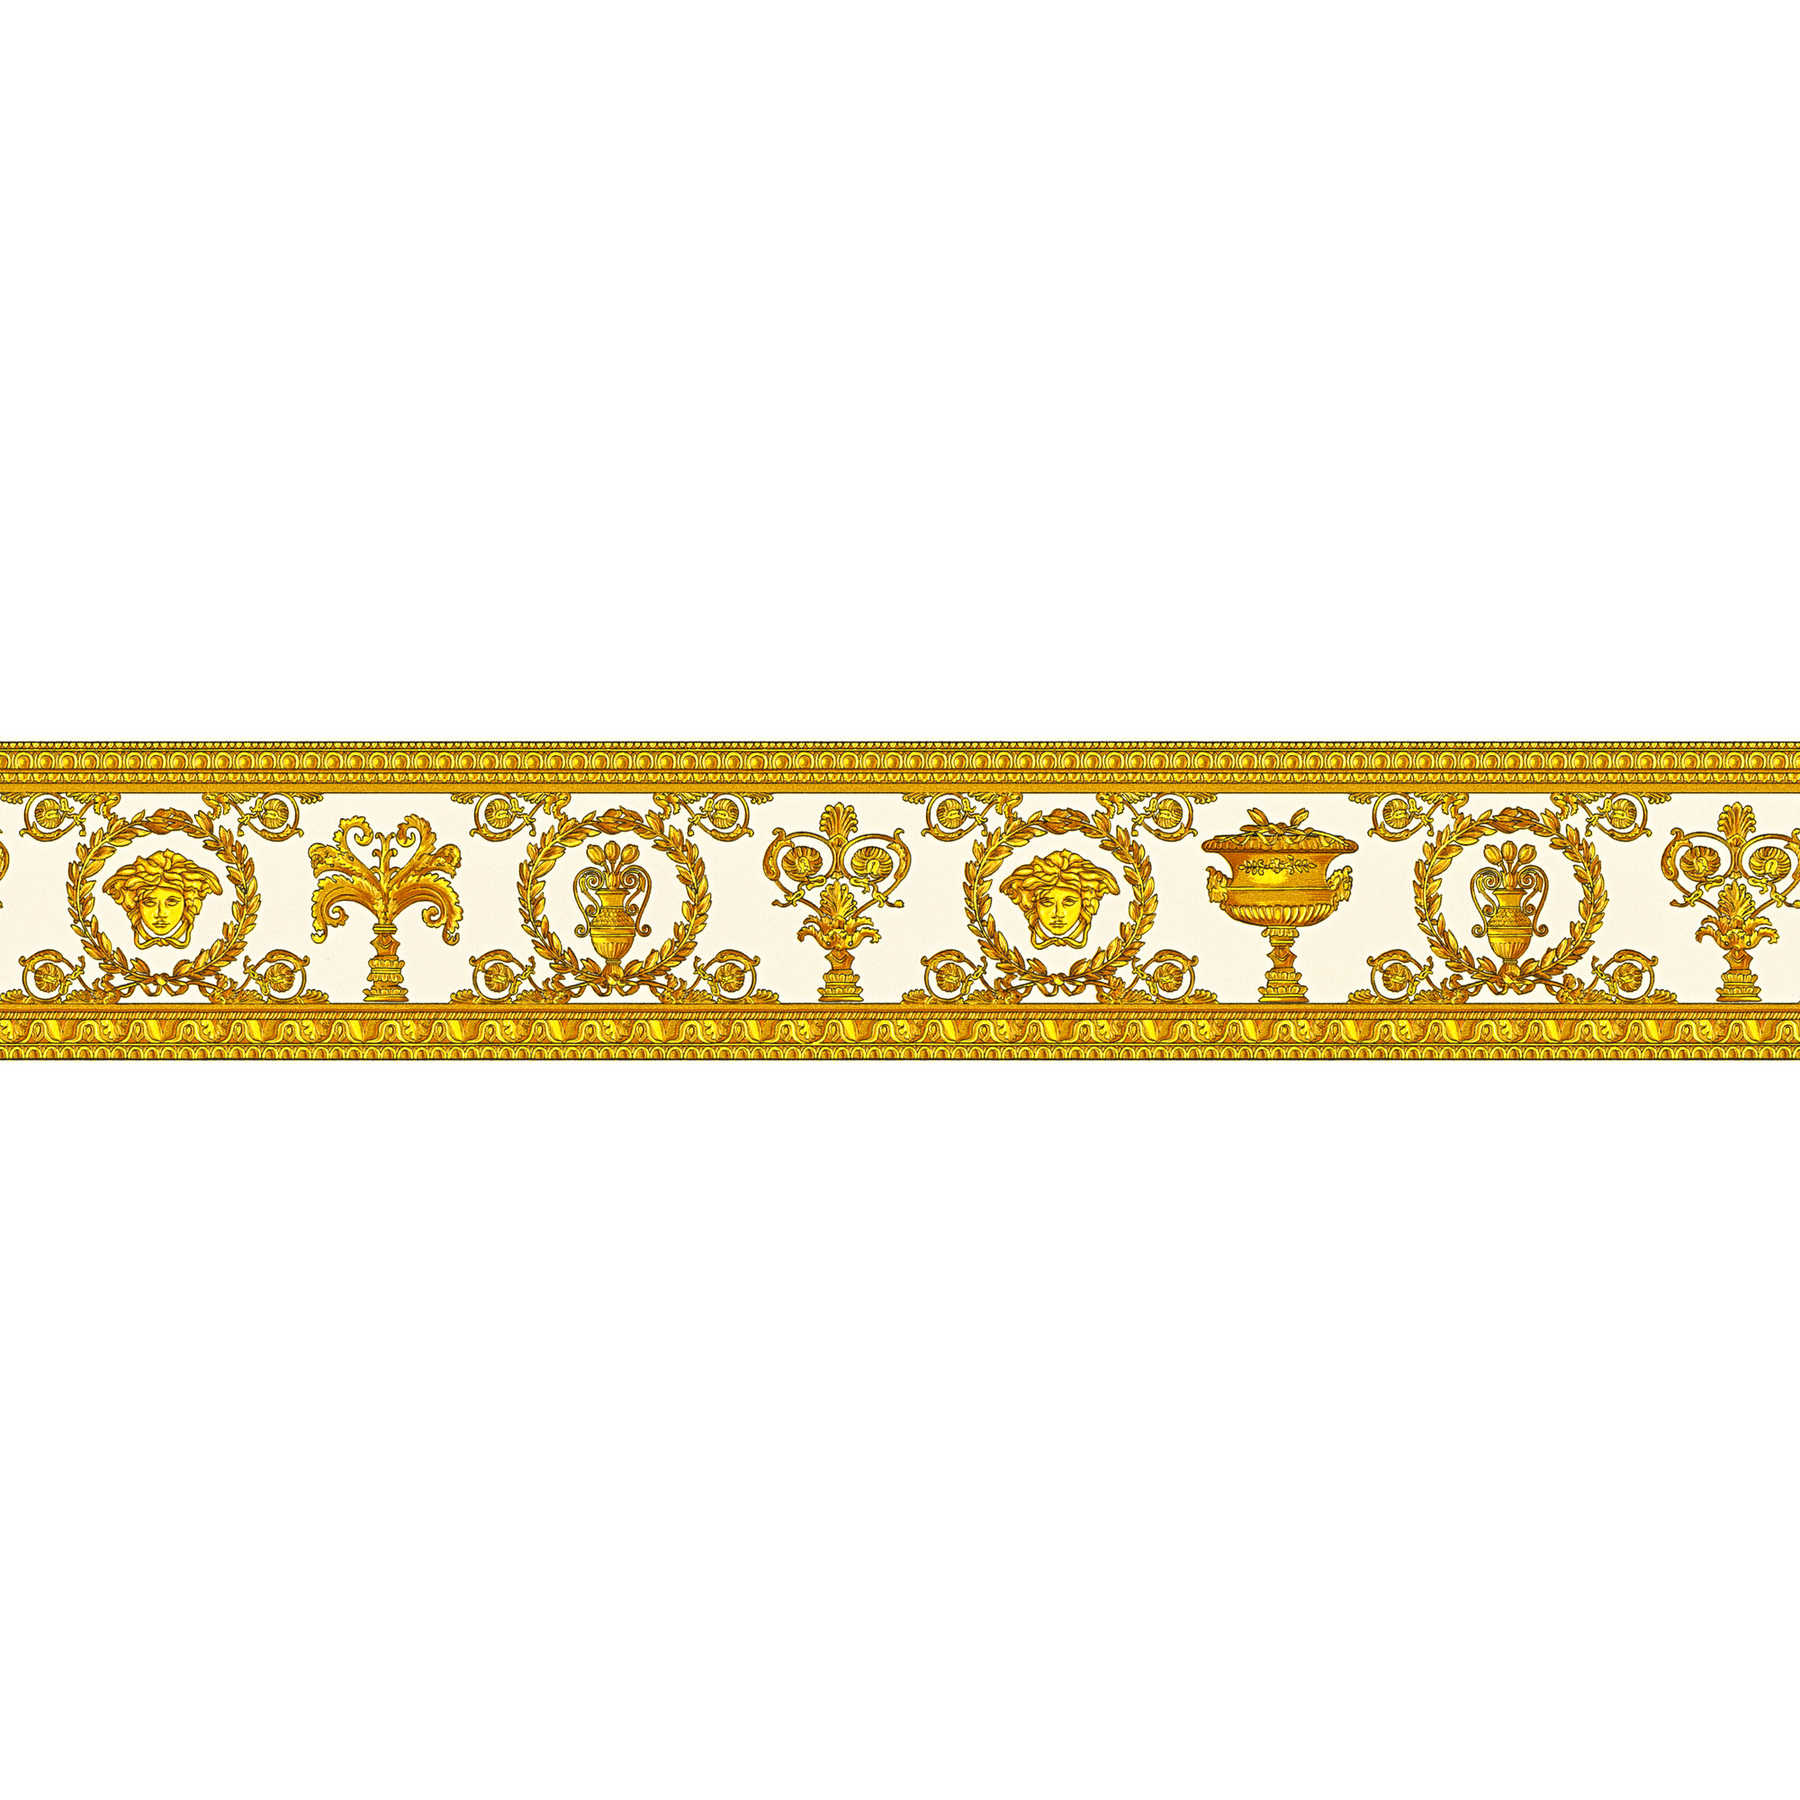             VERSACE wallpaper border golden ornamental border - metallic
        